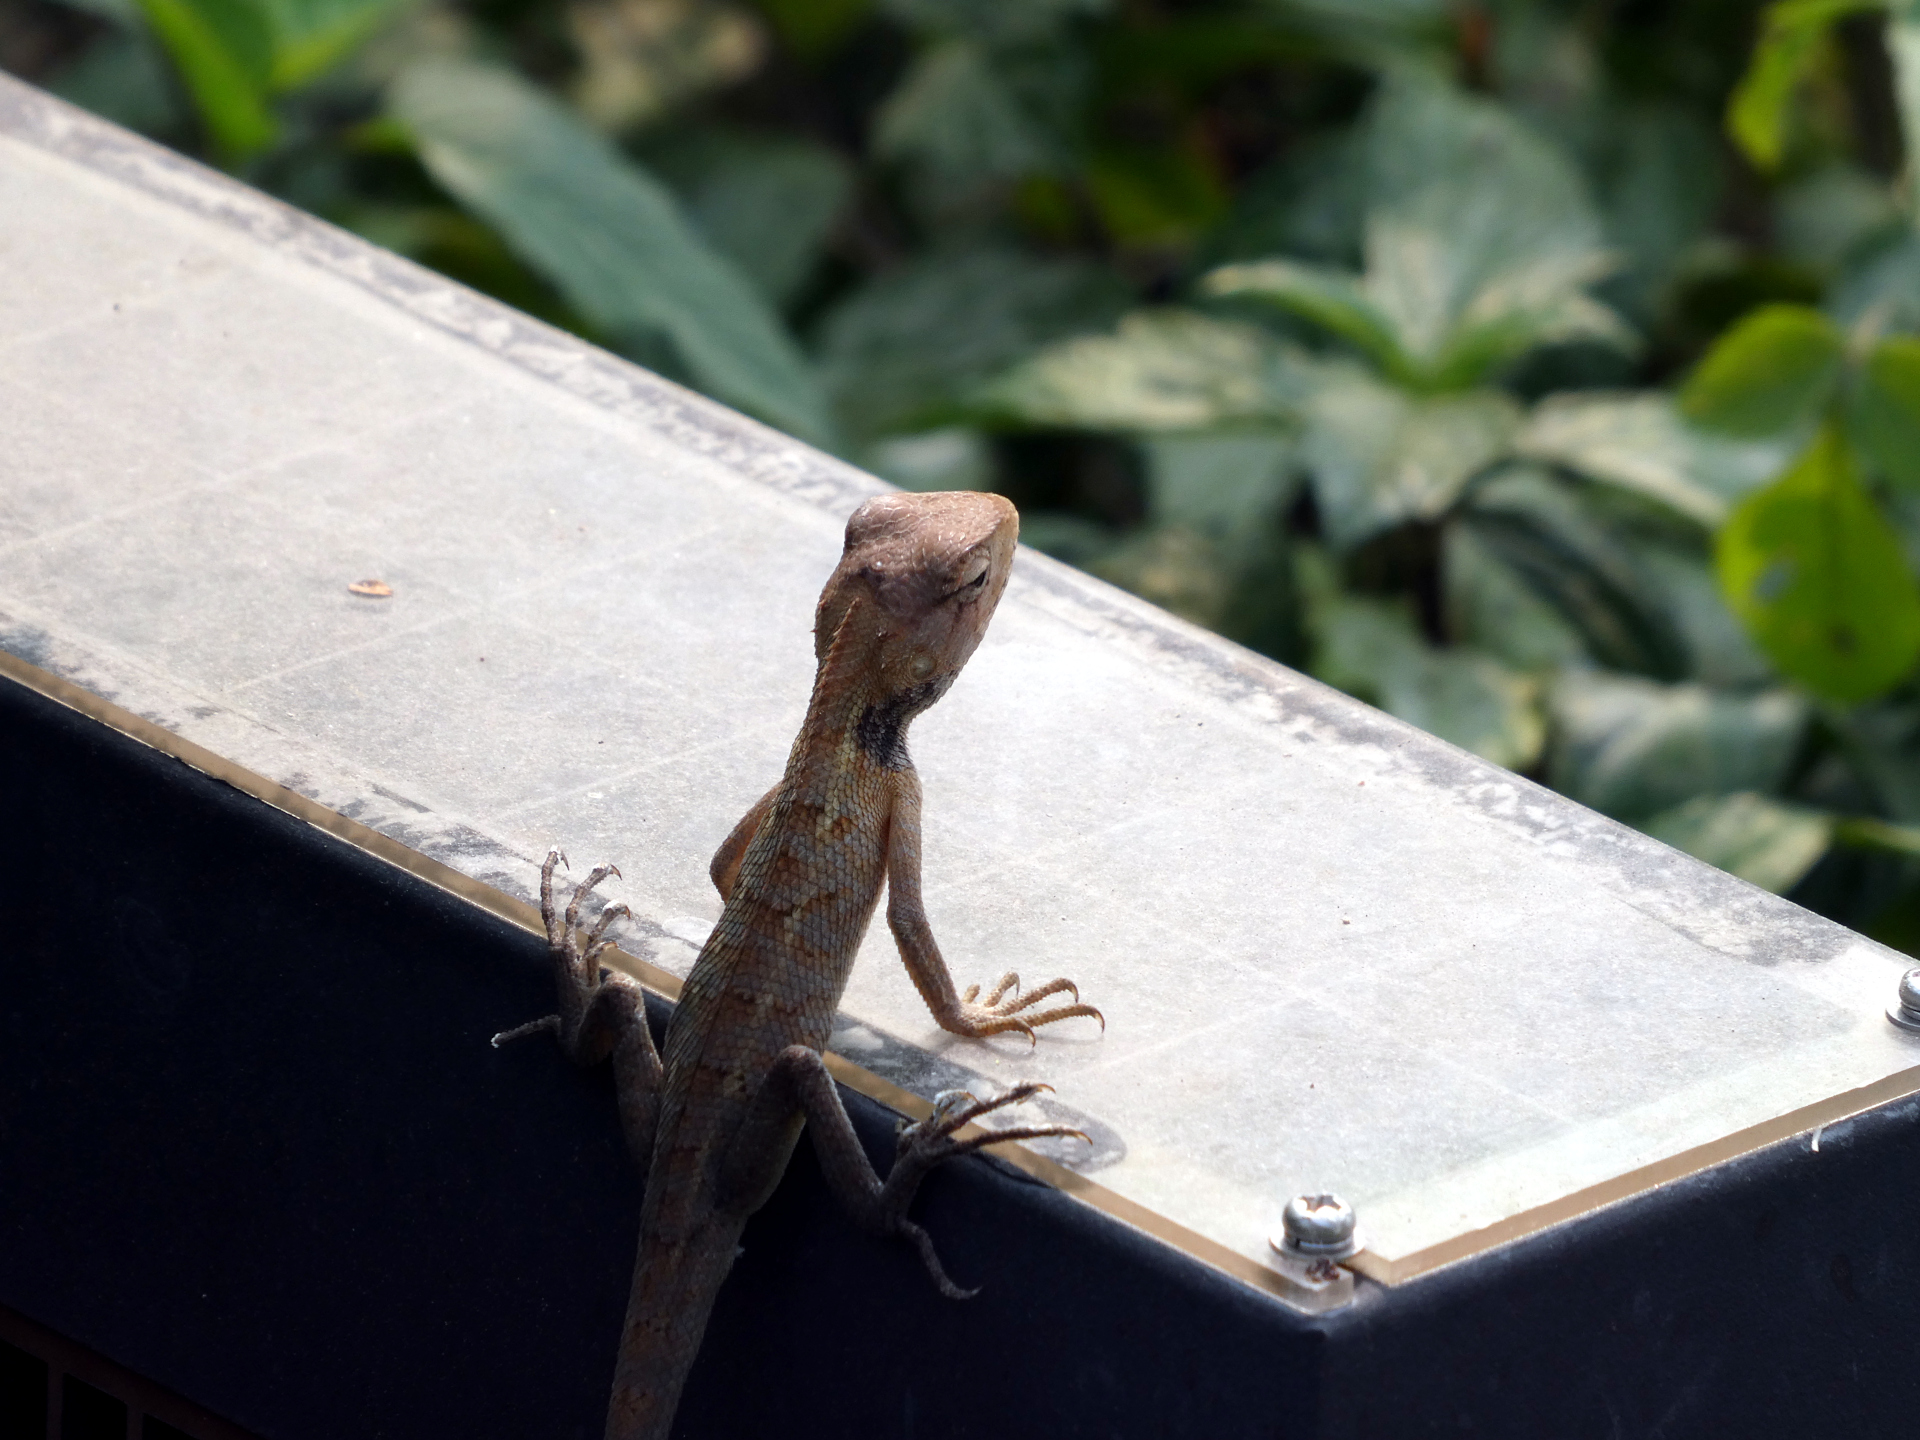 A lizard in Paifang Park